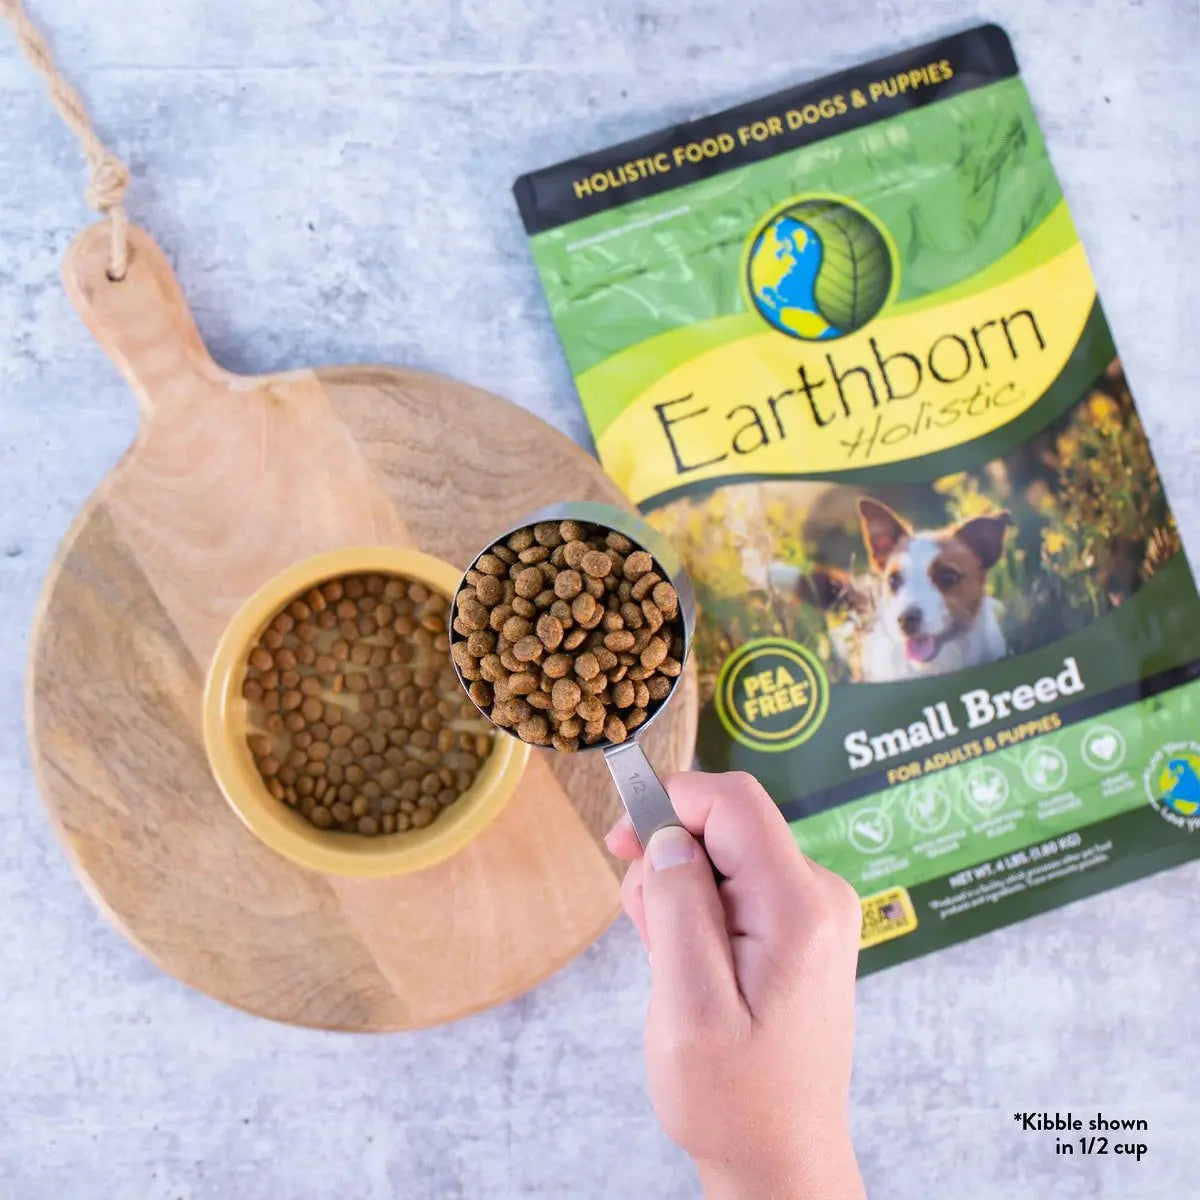 Earthborn Holistic® Grain Free Small Breed Dog Food 12.5 Lbs Earthborn Holistic®